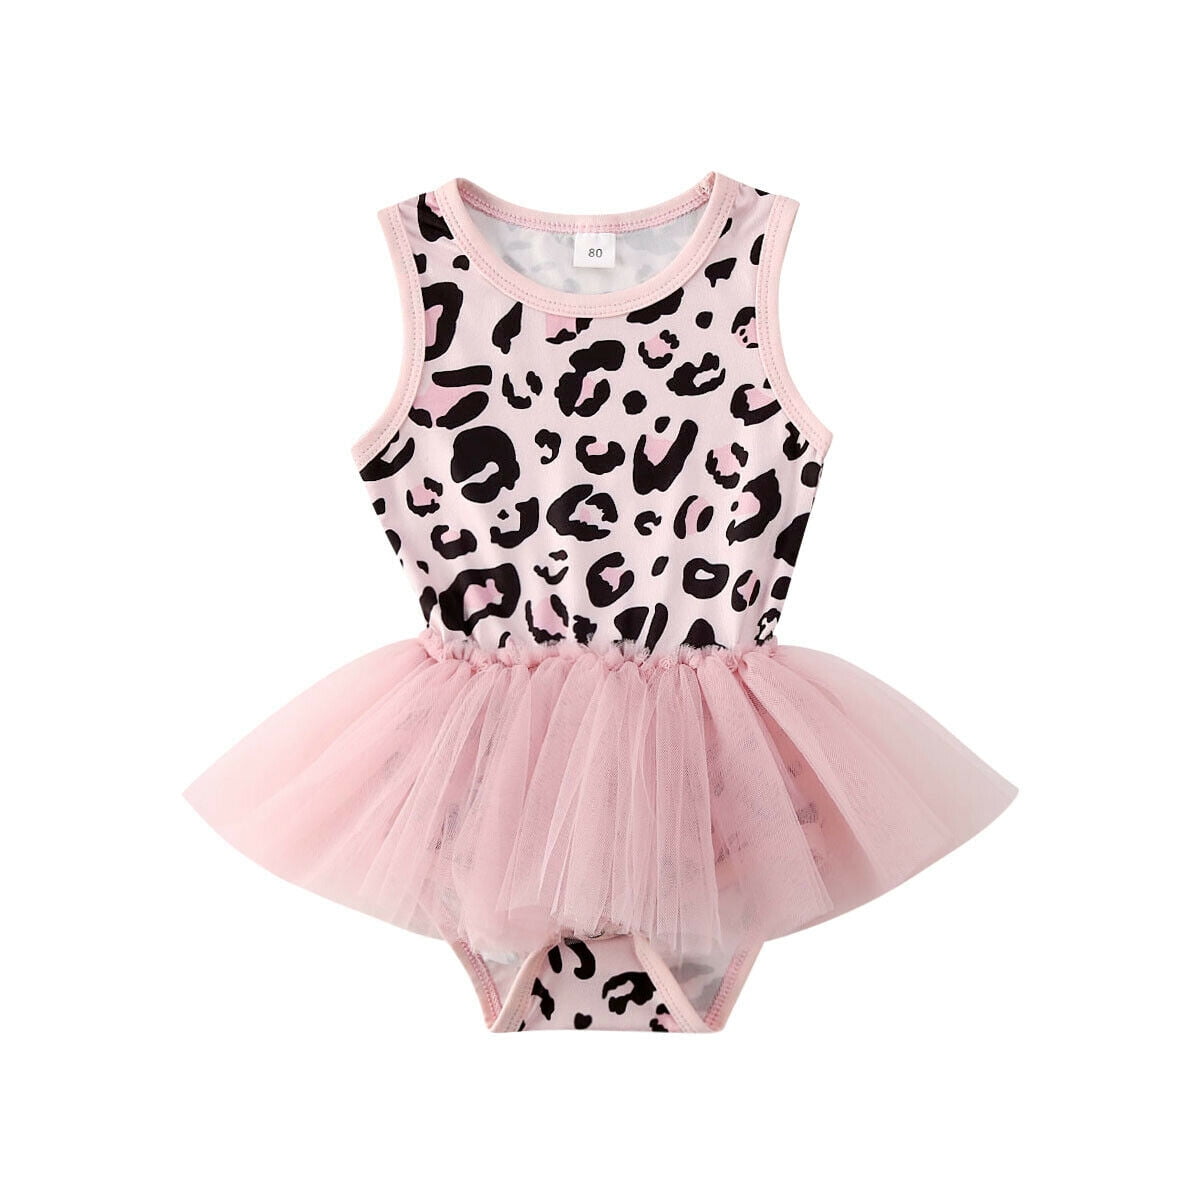 Girls Baby Toddler Flamingo Mesh Skirt Tutu Sleeveless Dress 9 to 36 Months 